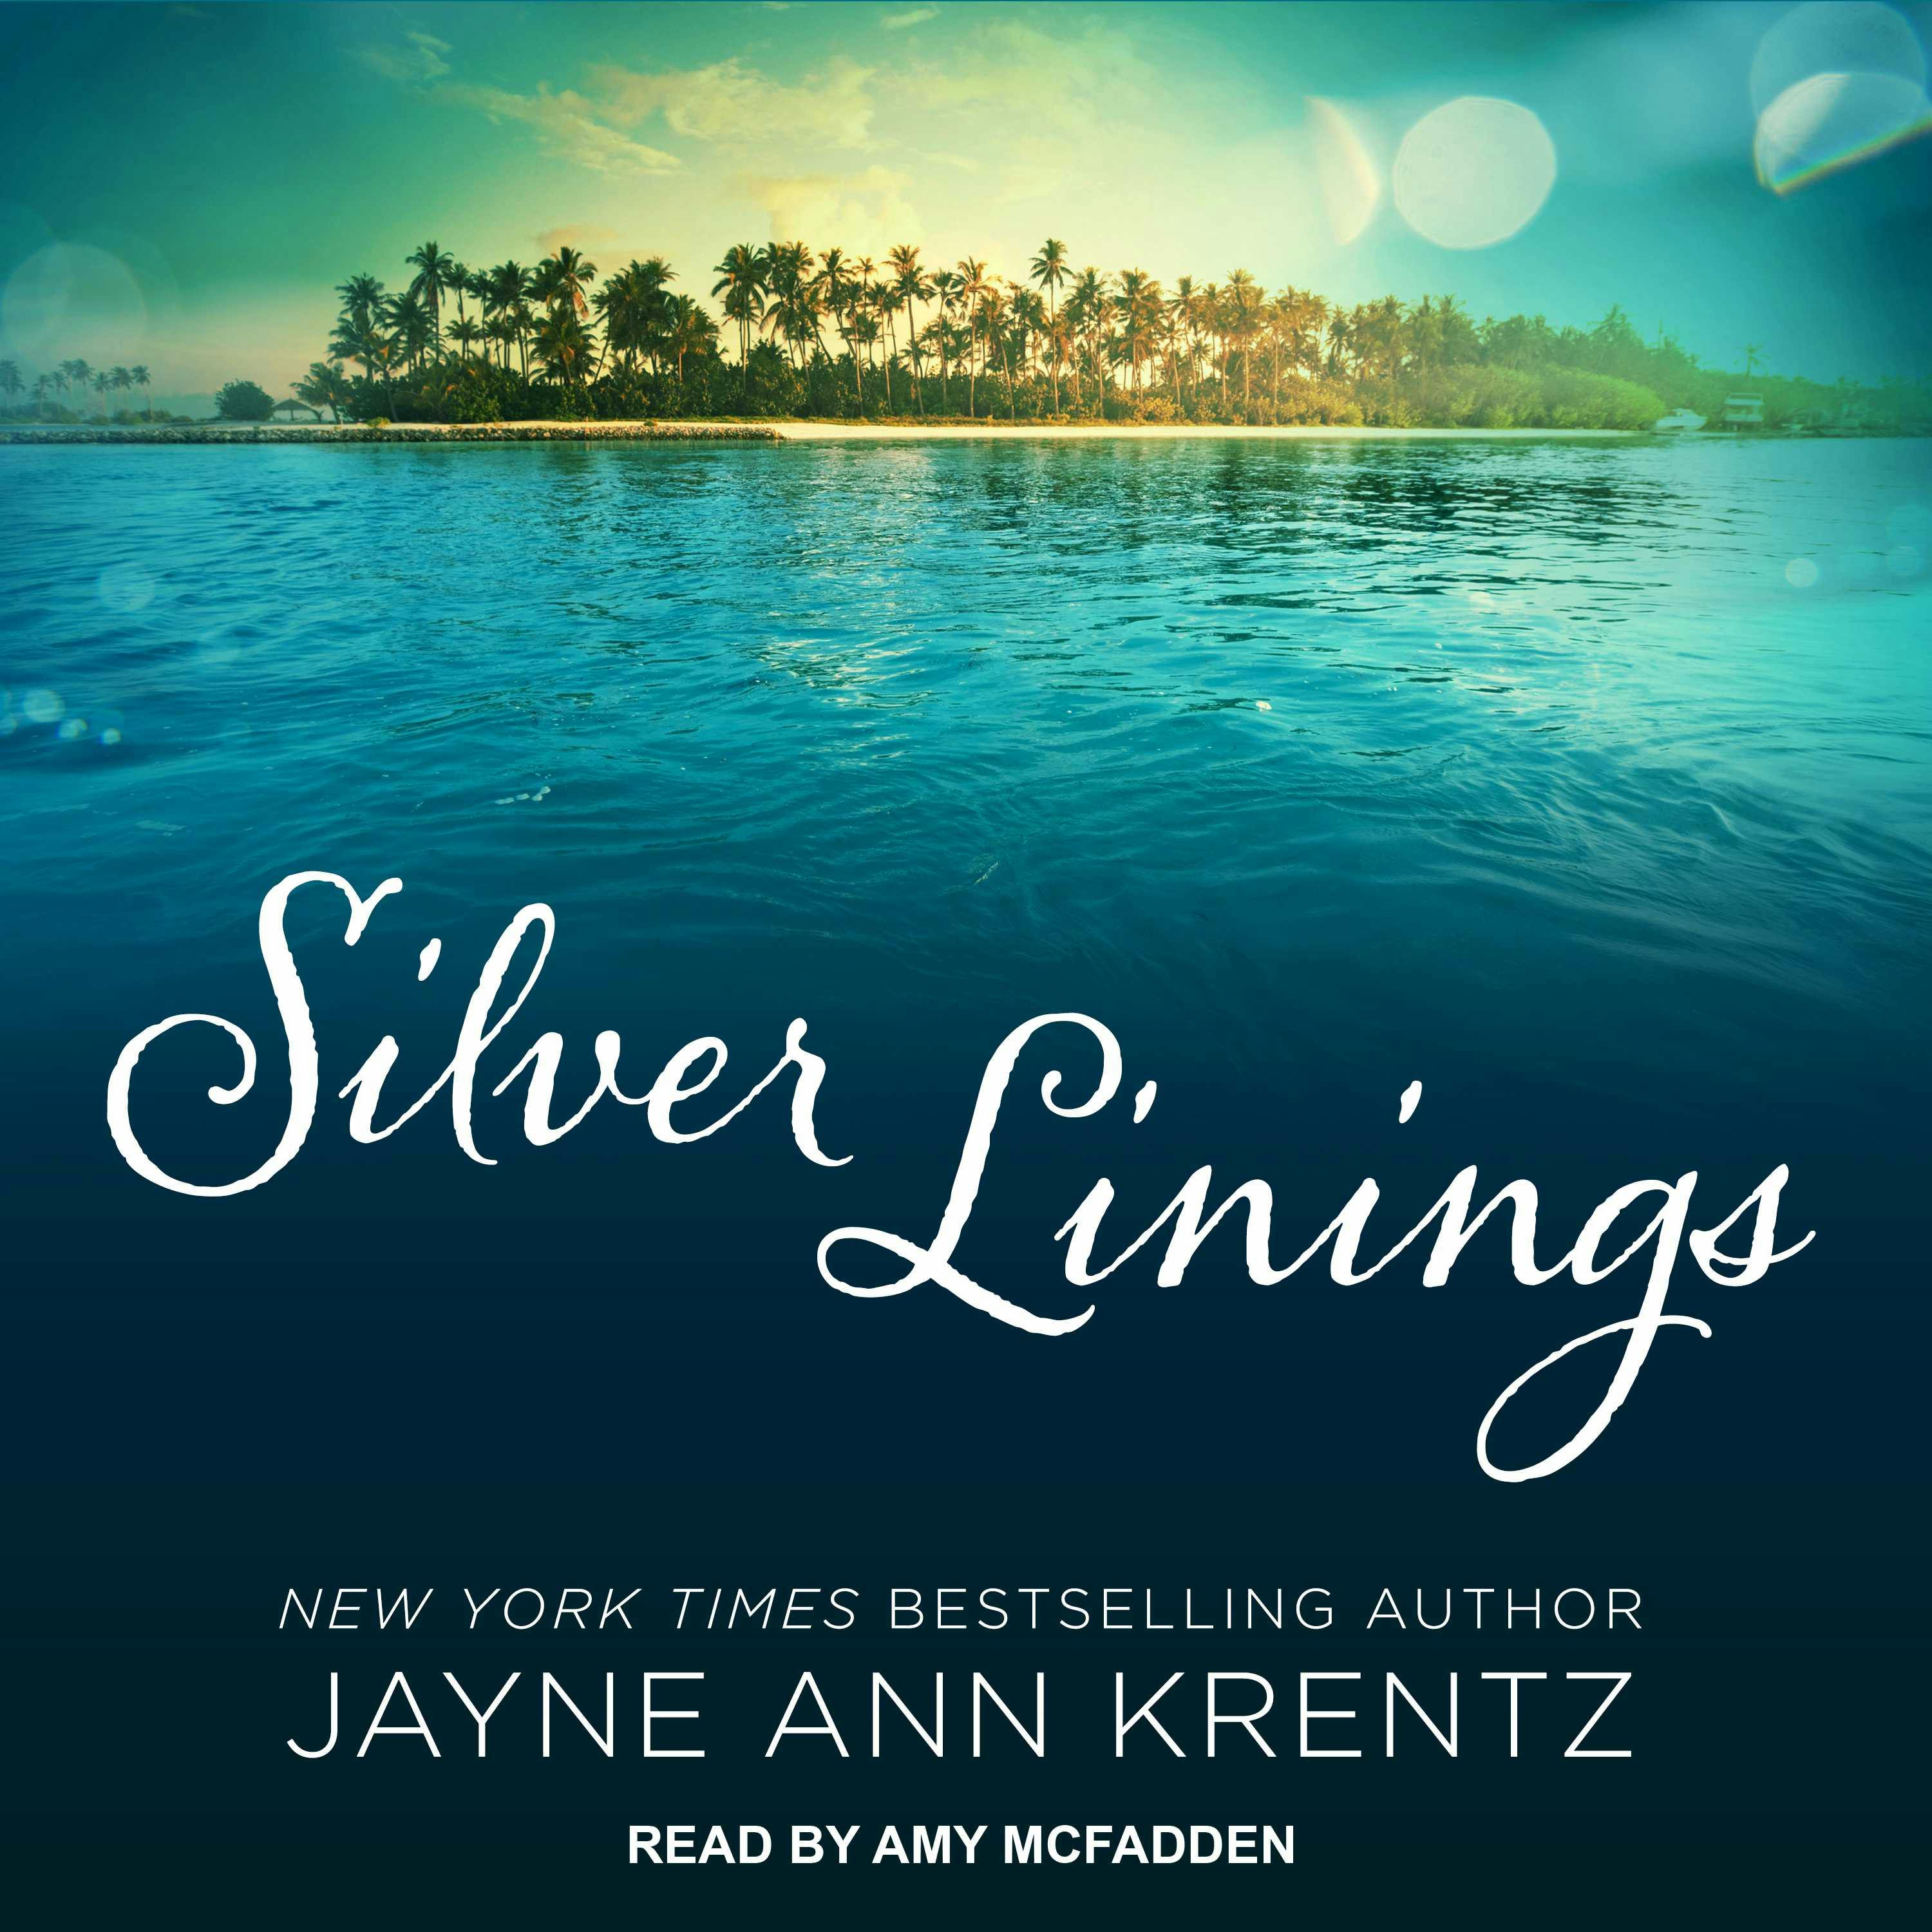 Silver Linings - Jayne Ann Krentz